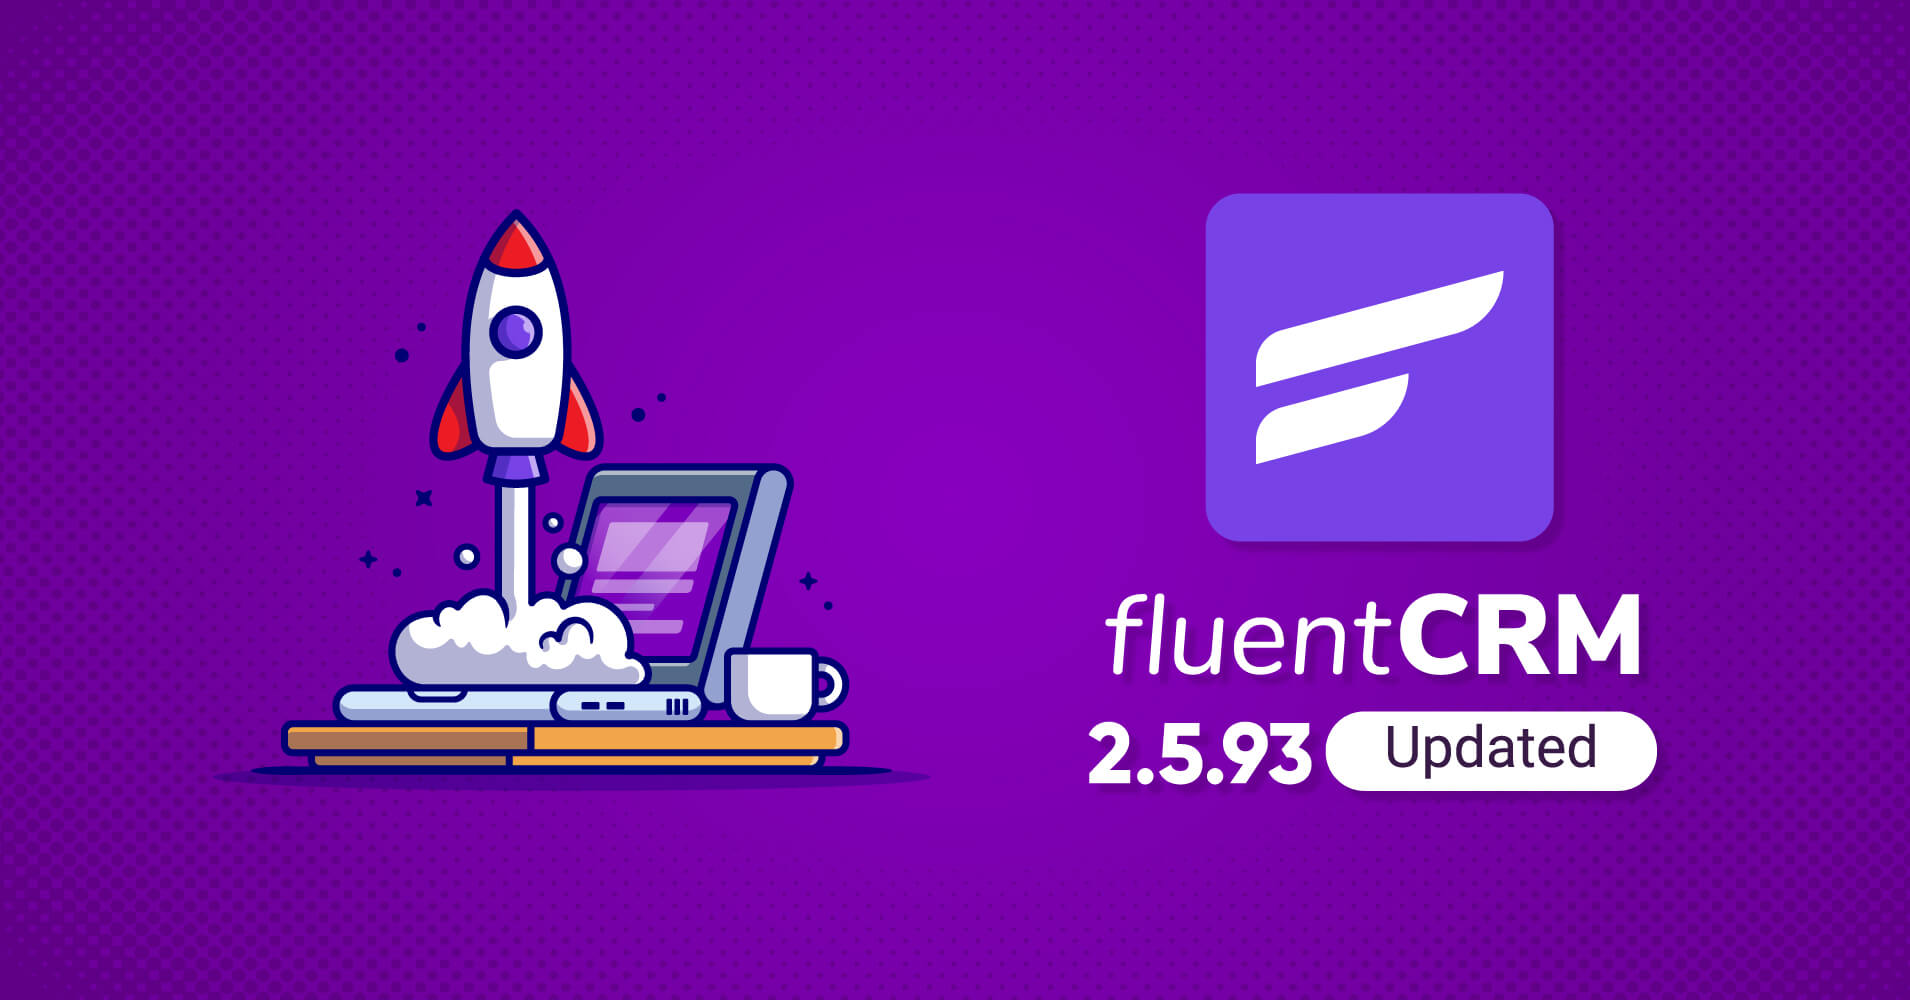 FluentCRM 2.5.93: Performance Improvements and Bug Fixes